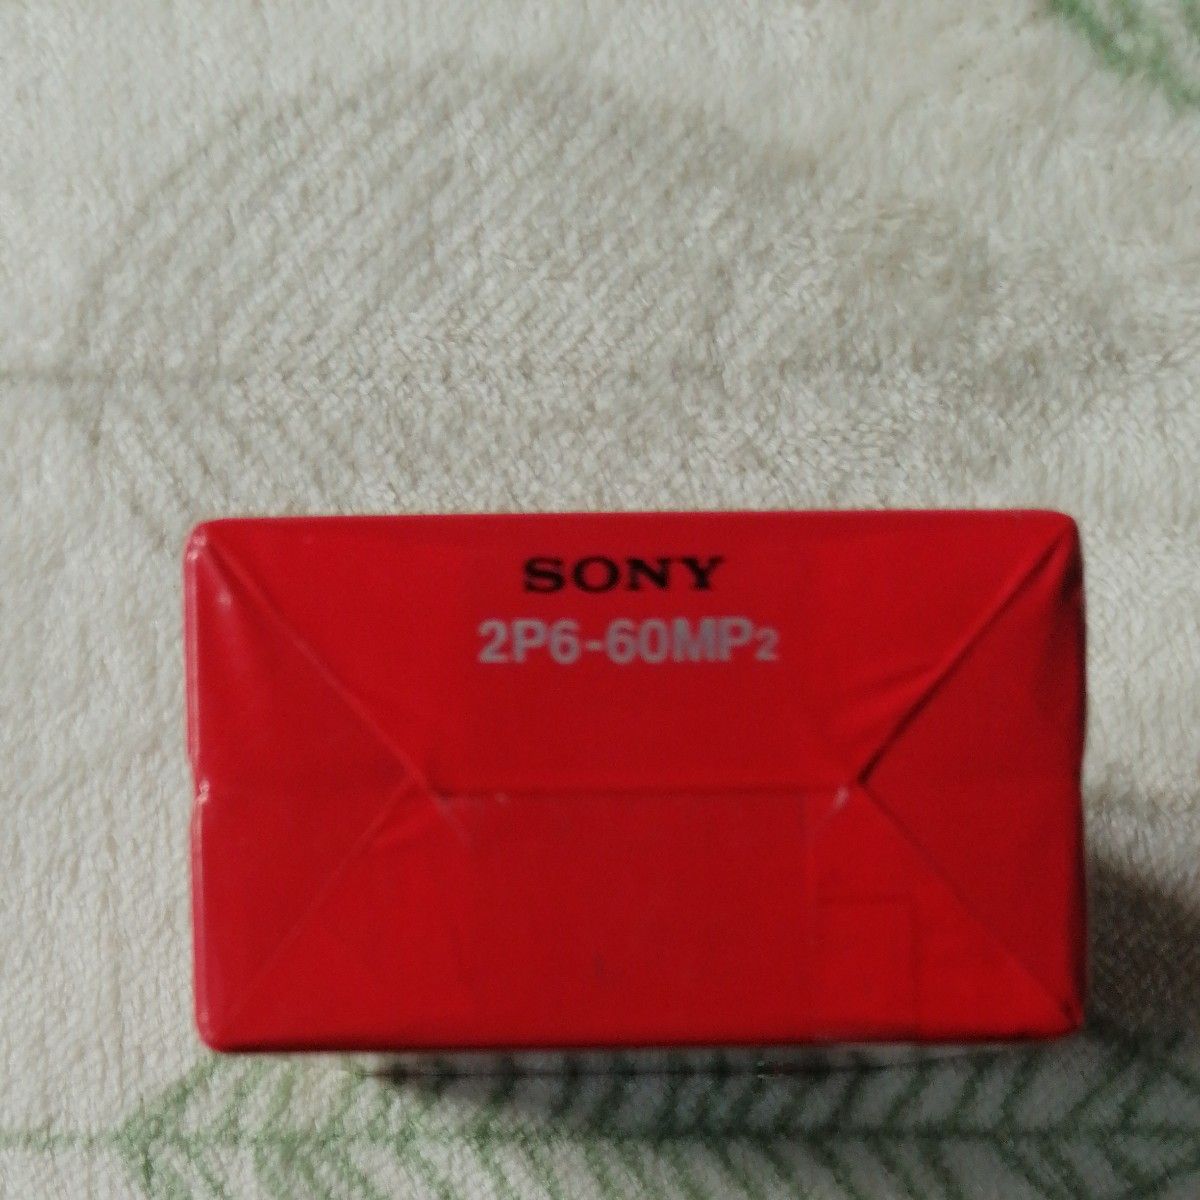 SONY 8ミリビデオ カセットテープ P6-60MP 2PACK